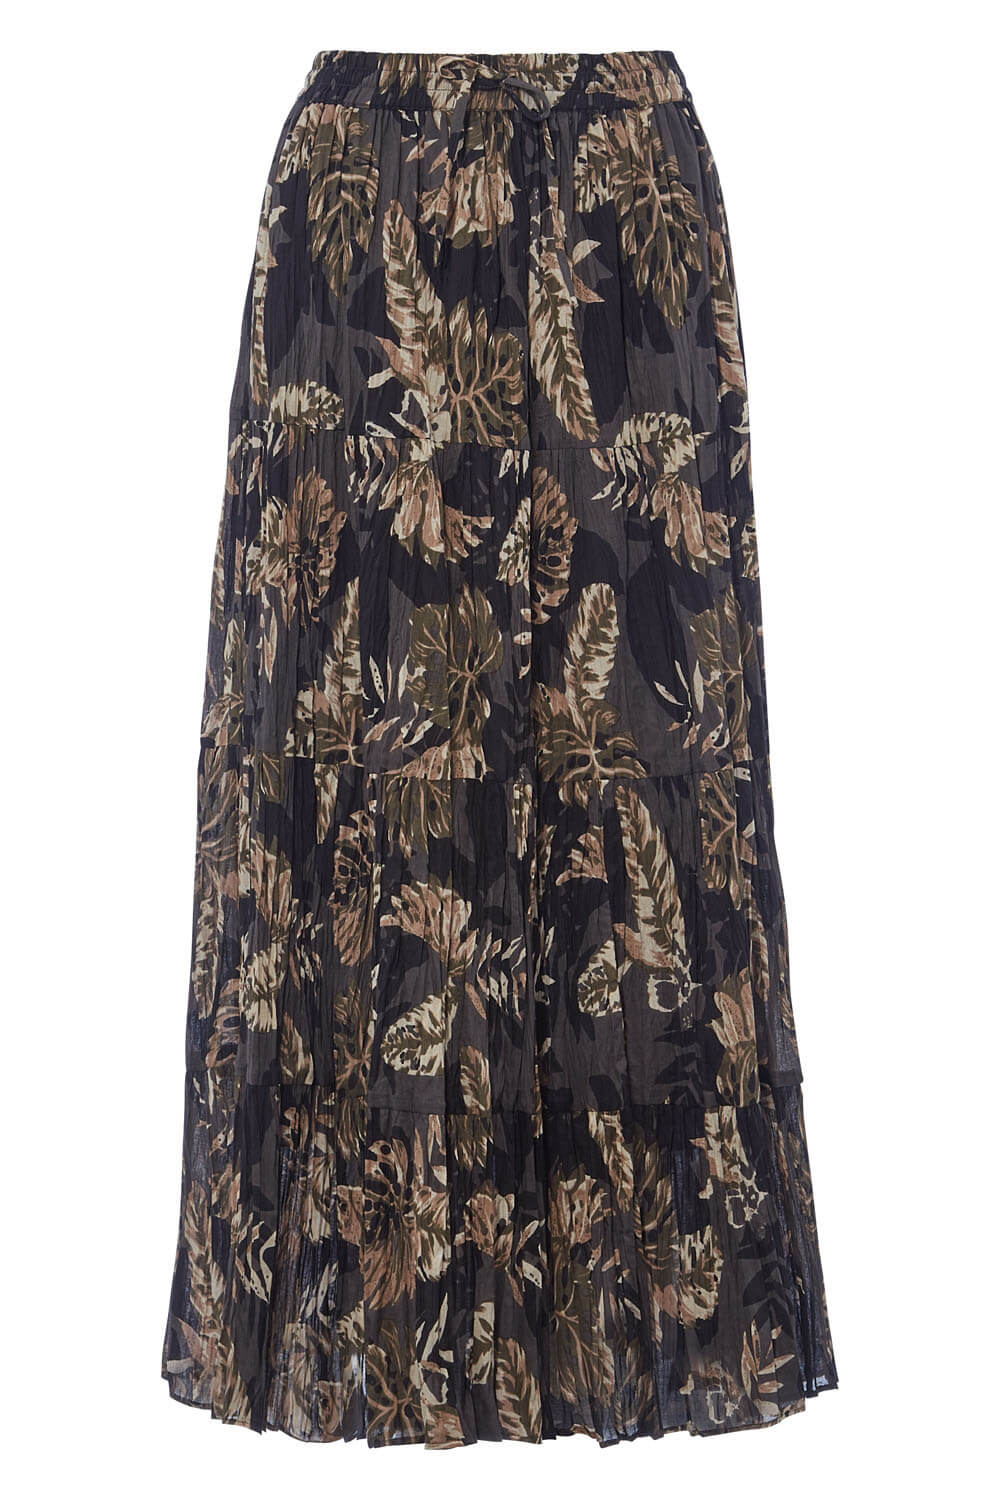 Safari Print Maxi Skirt in Khaki - Roman Originals UK